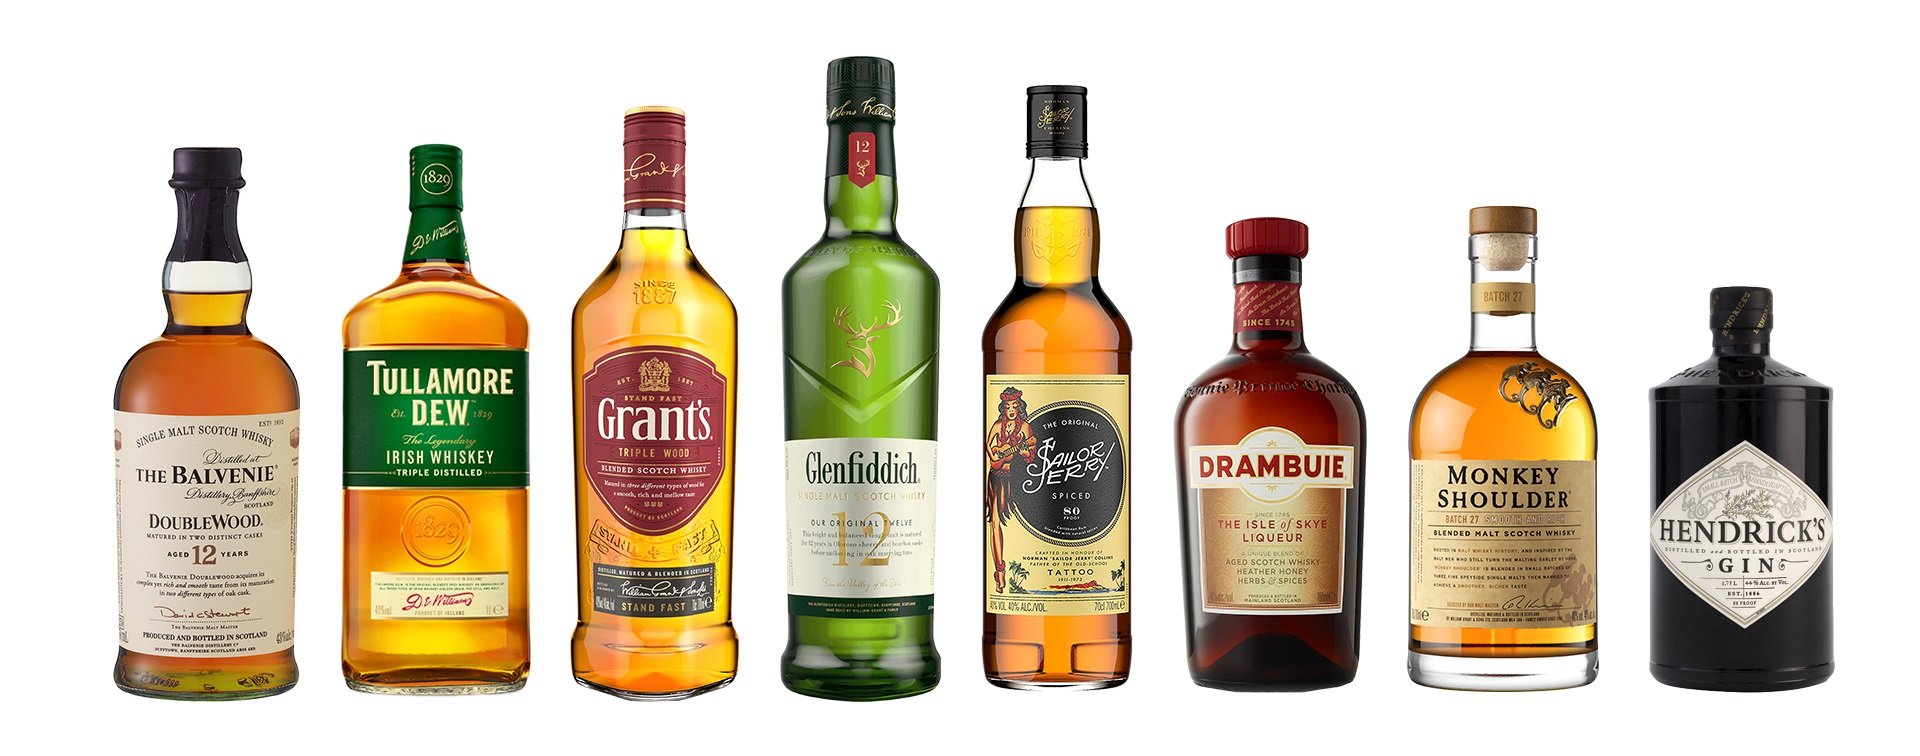 william-grant-scotch-whisky-bottle-line-up.jpg